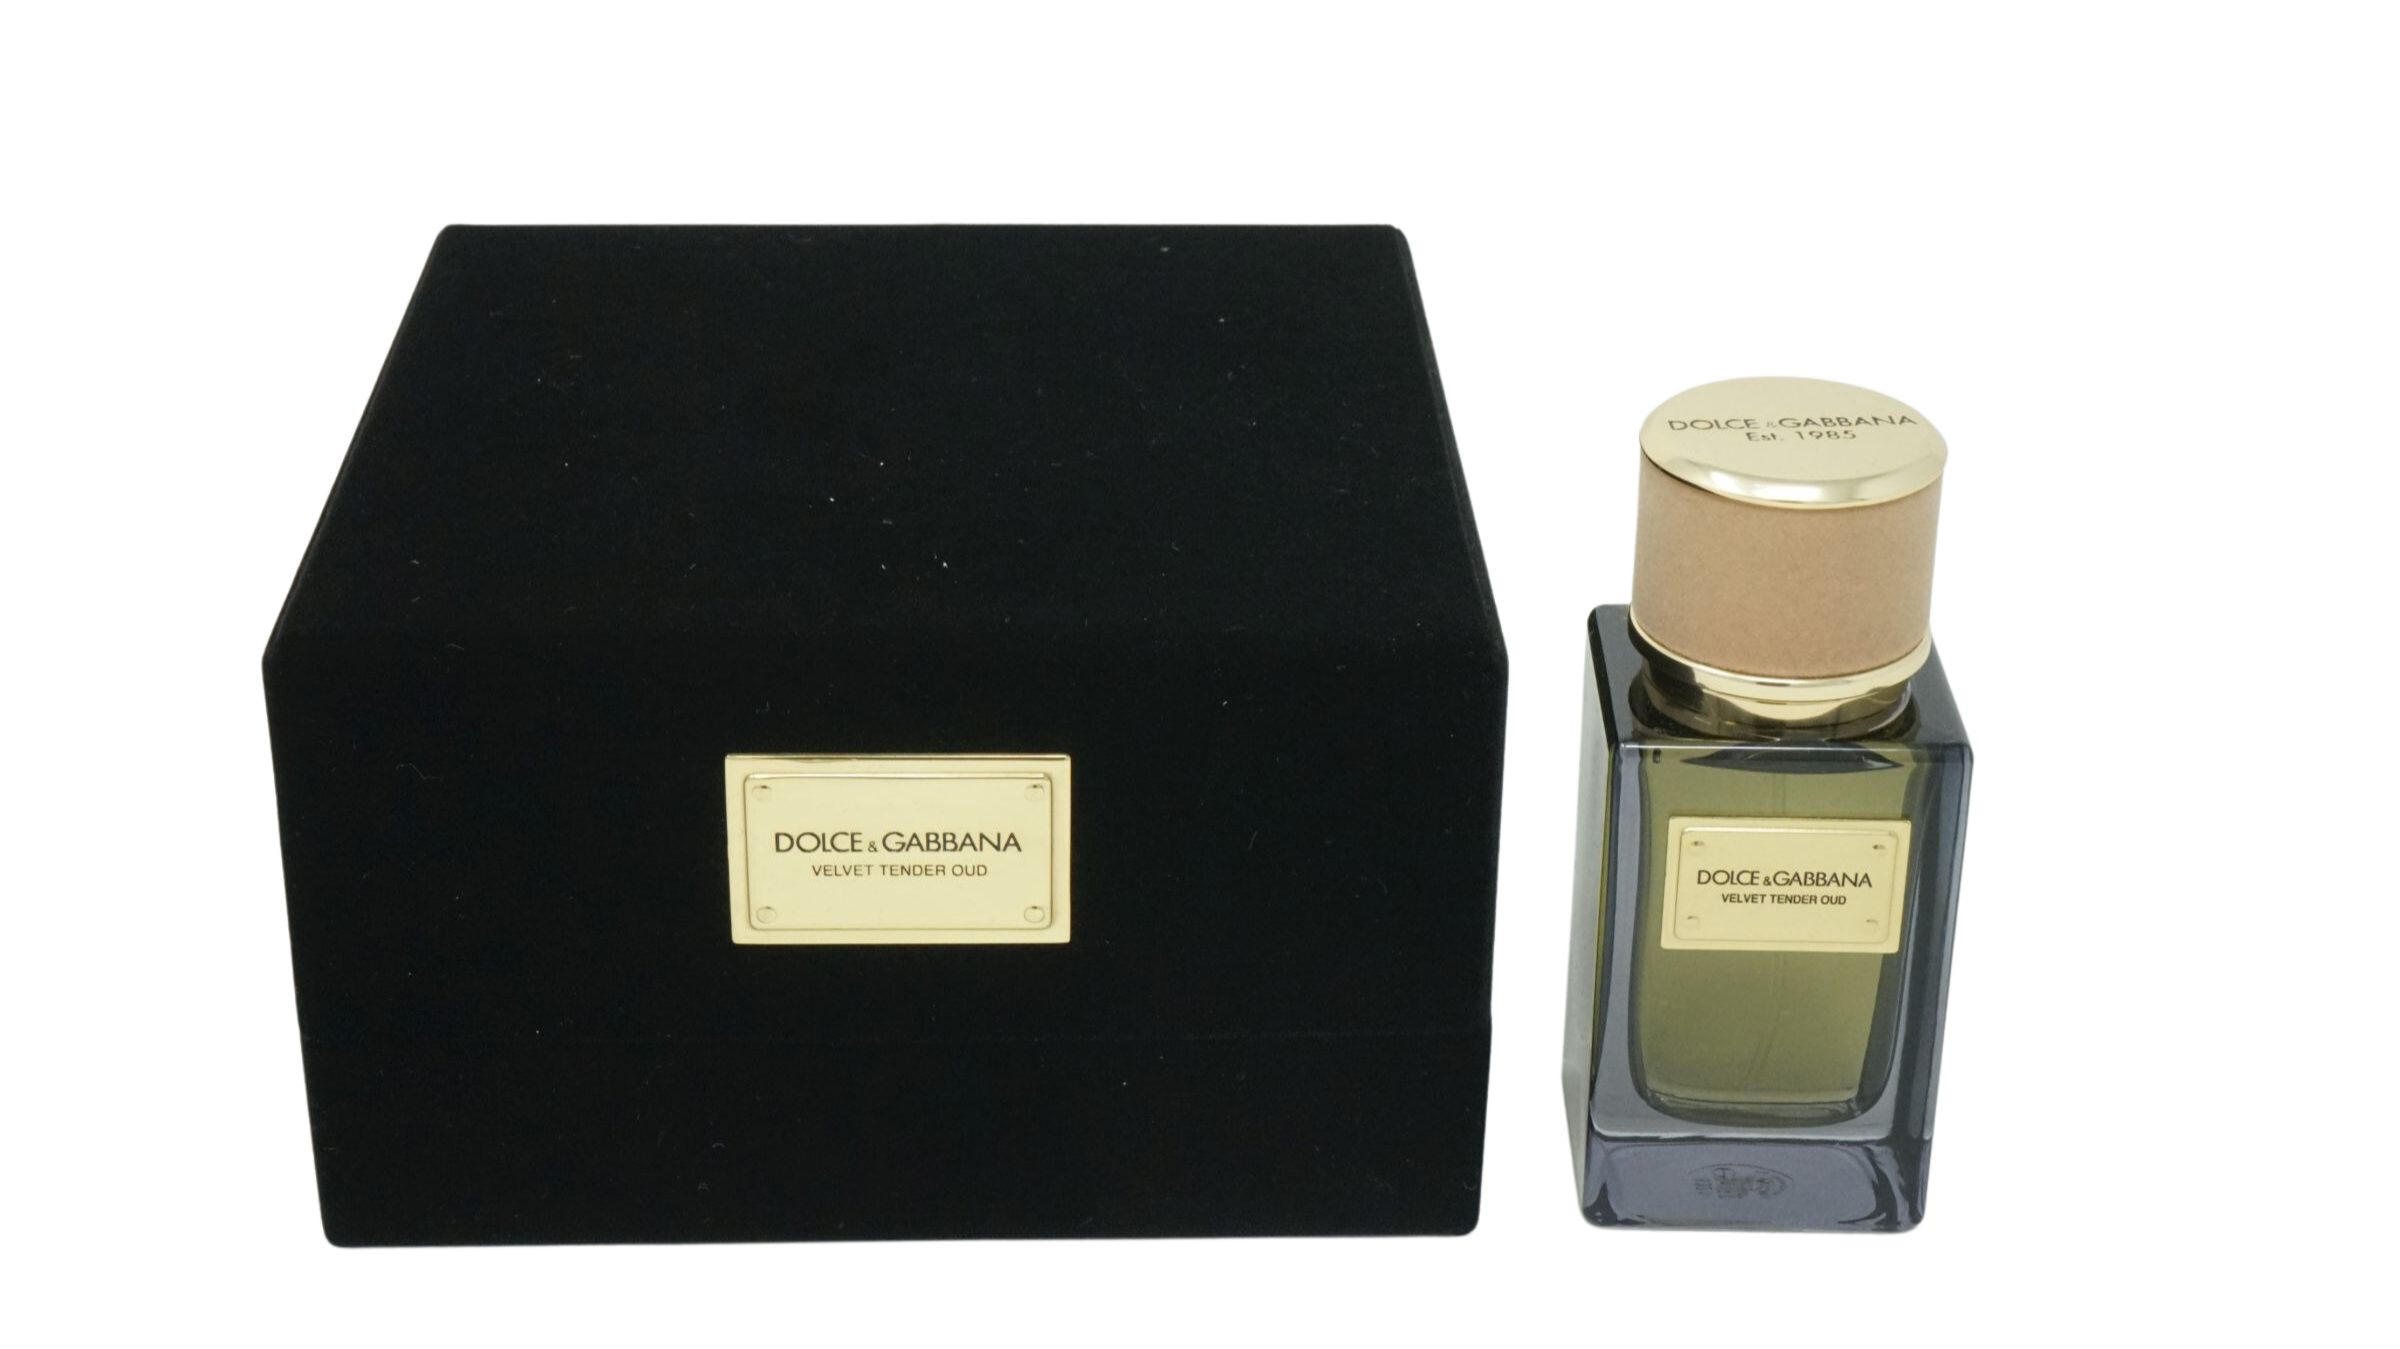 DOLCE & GABBANA Velvet Eau Parfum Spray & Toilette Eau Tender de Gabbana de Dolce Oud 50ml